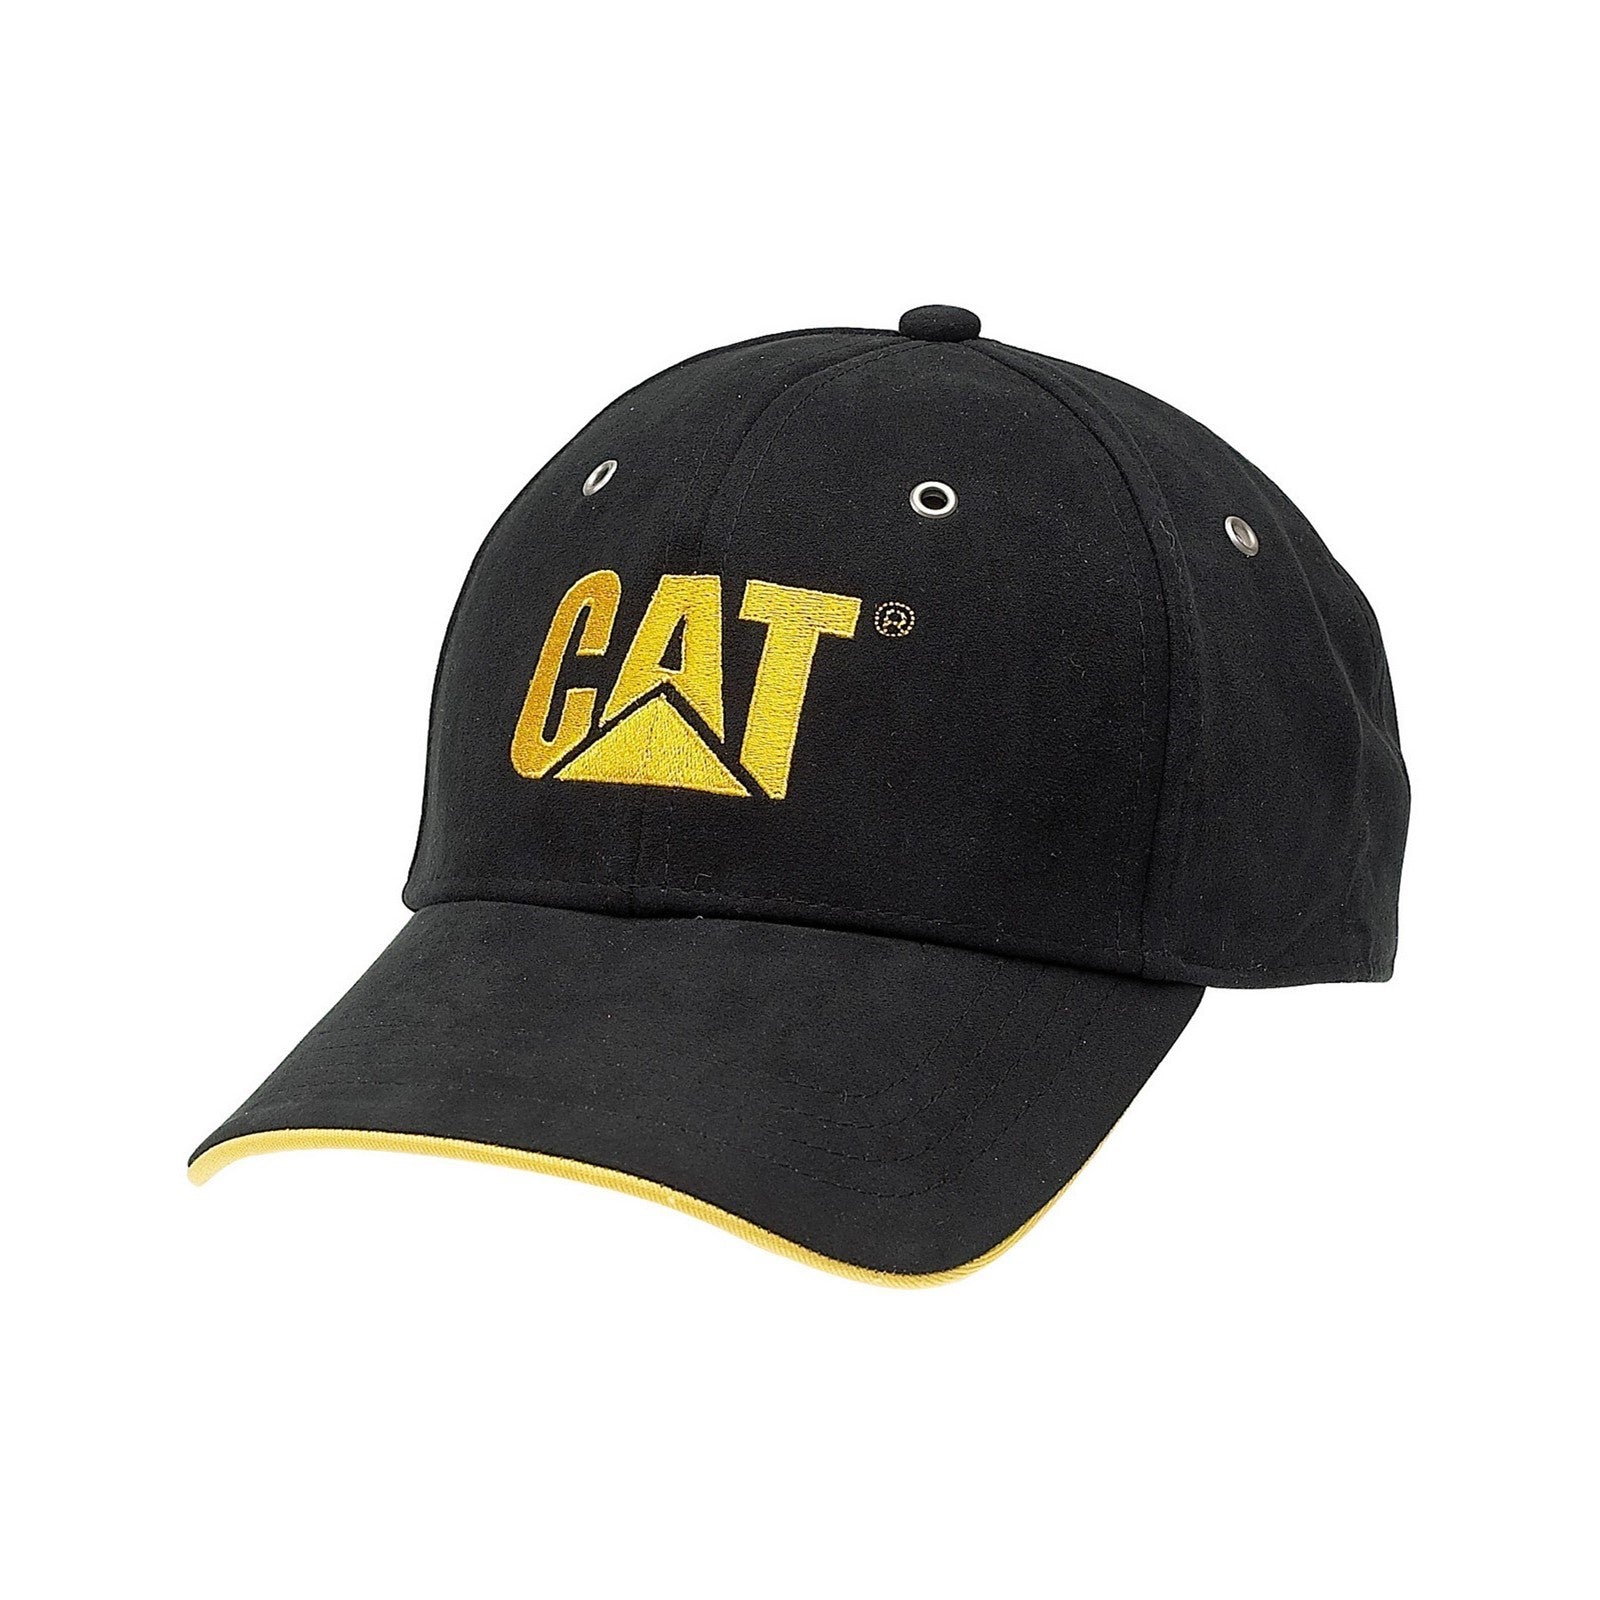 Trademark Microsuede Cap, Caterpillar